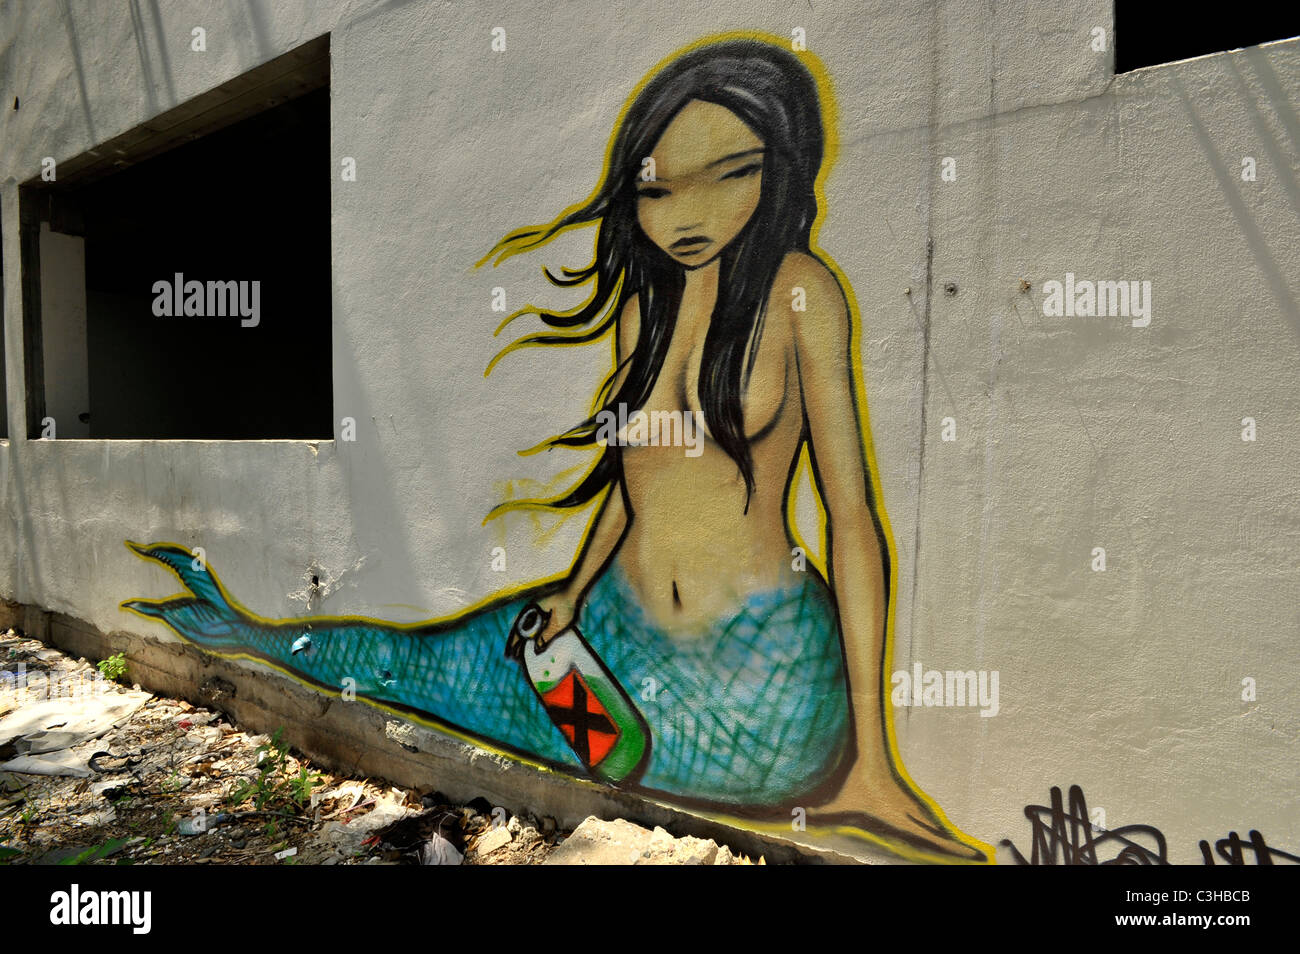 thai mermaid , graffiti on the wall, expressionism and social messaging, weird and bizarre art, bangkok, thailand Stock Photo